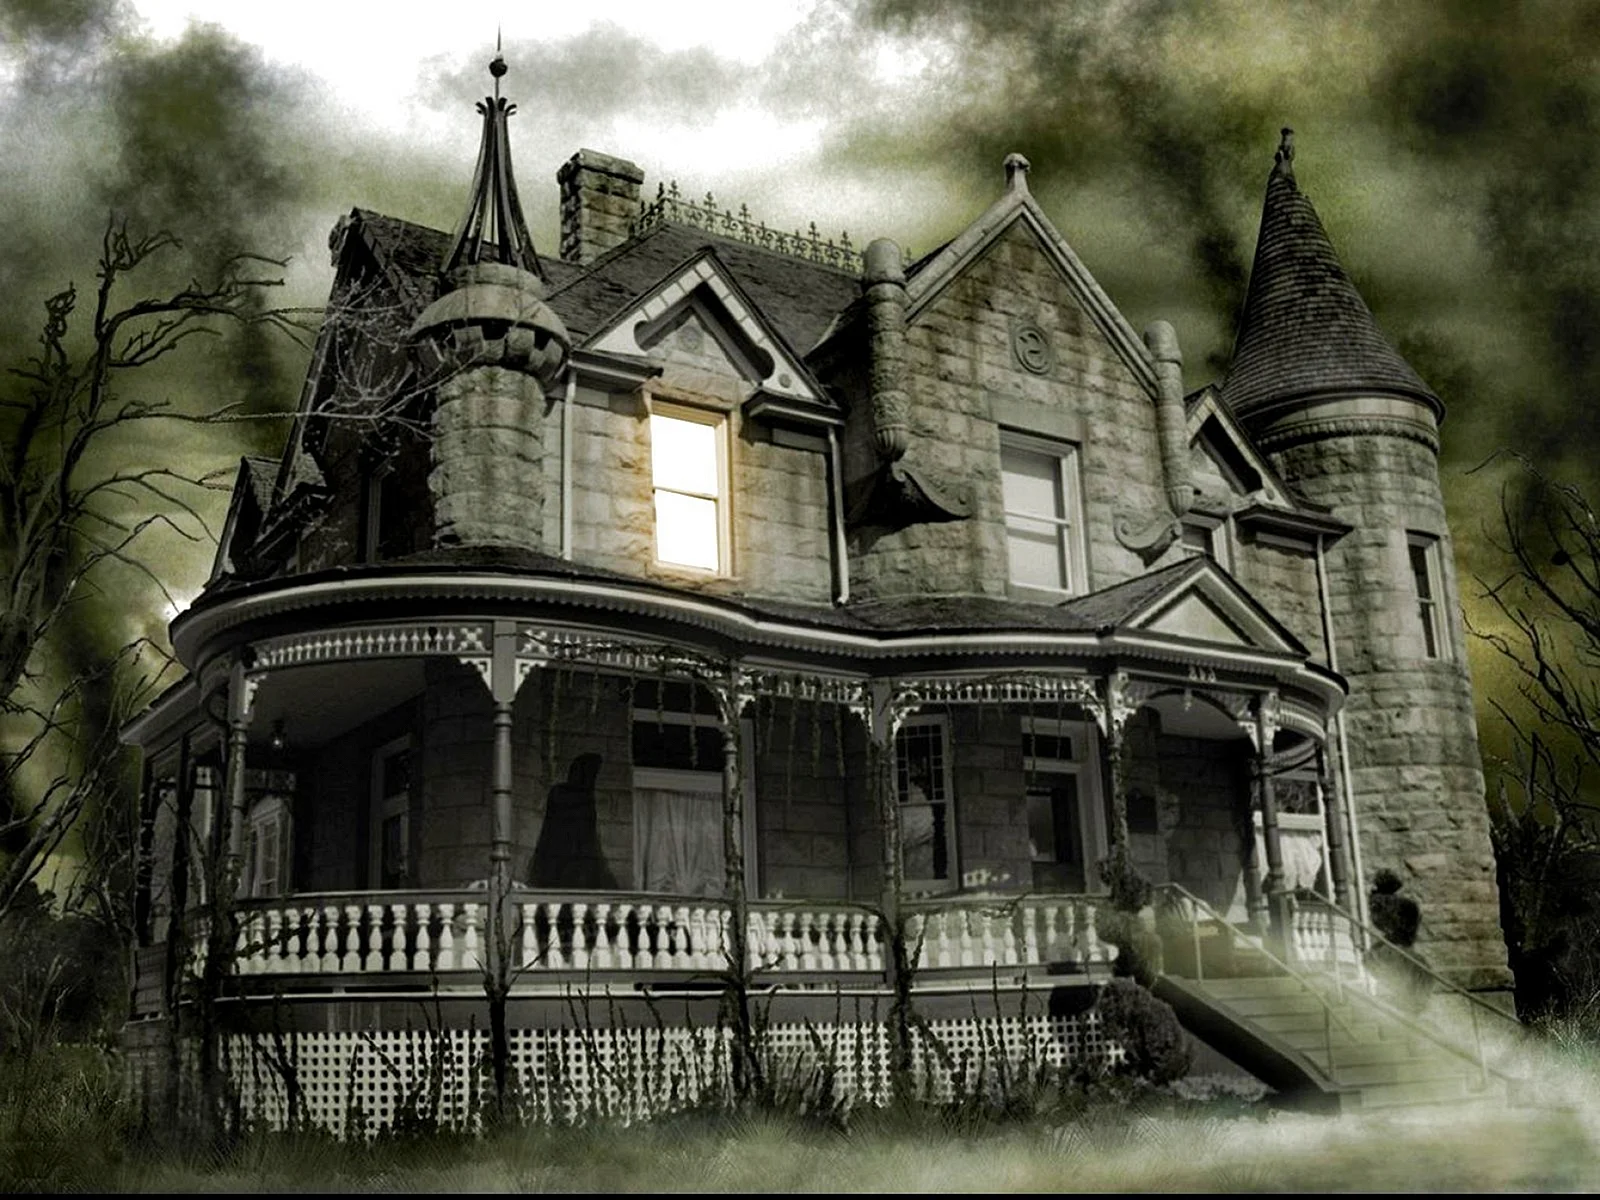 Haunted House Wallpaper